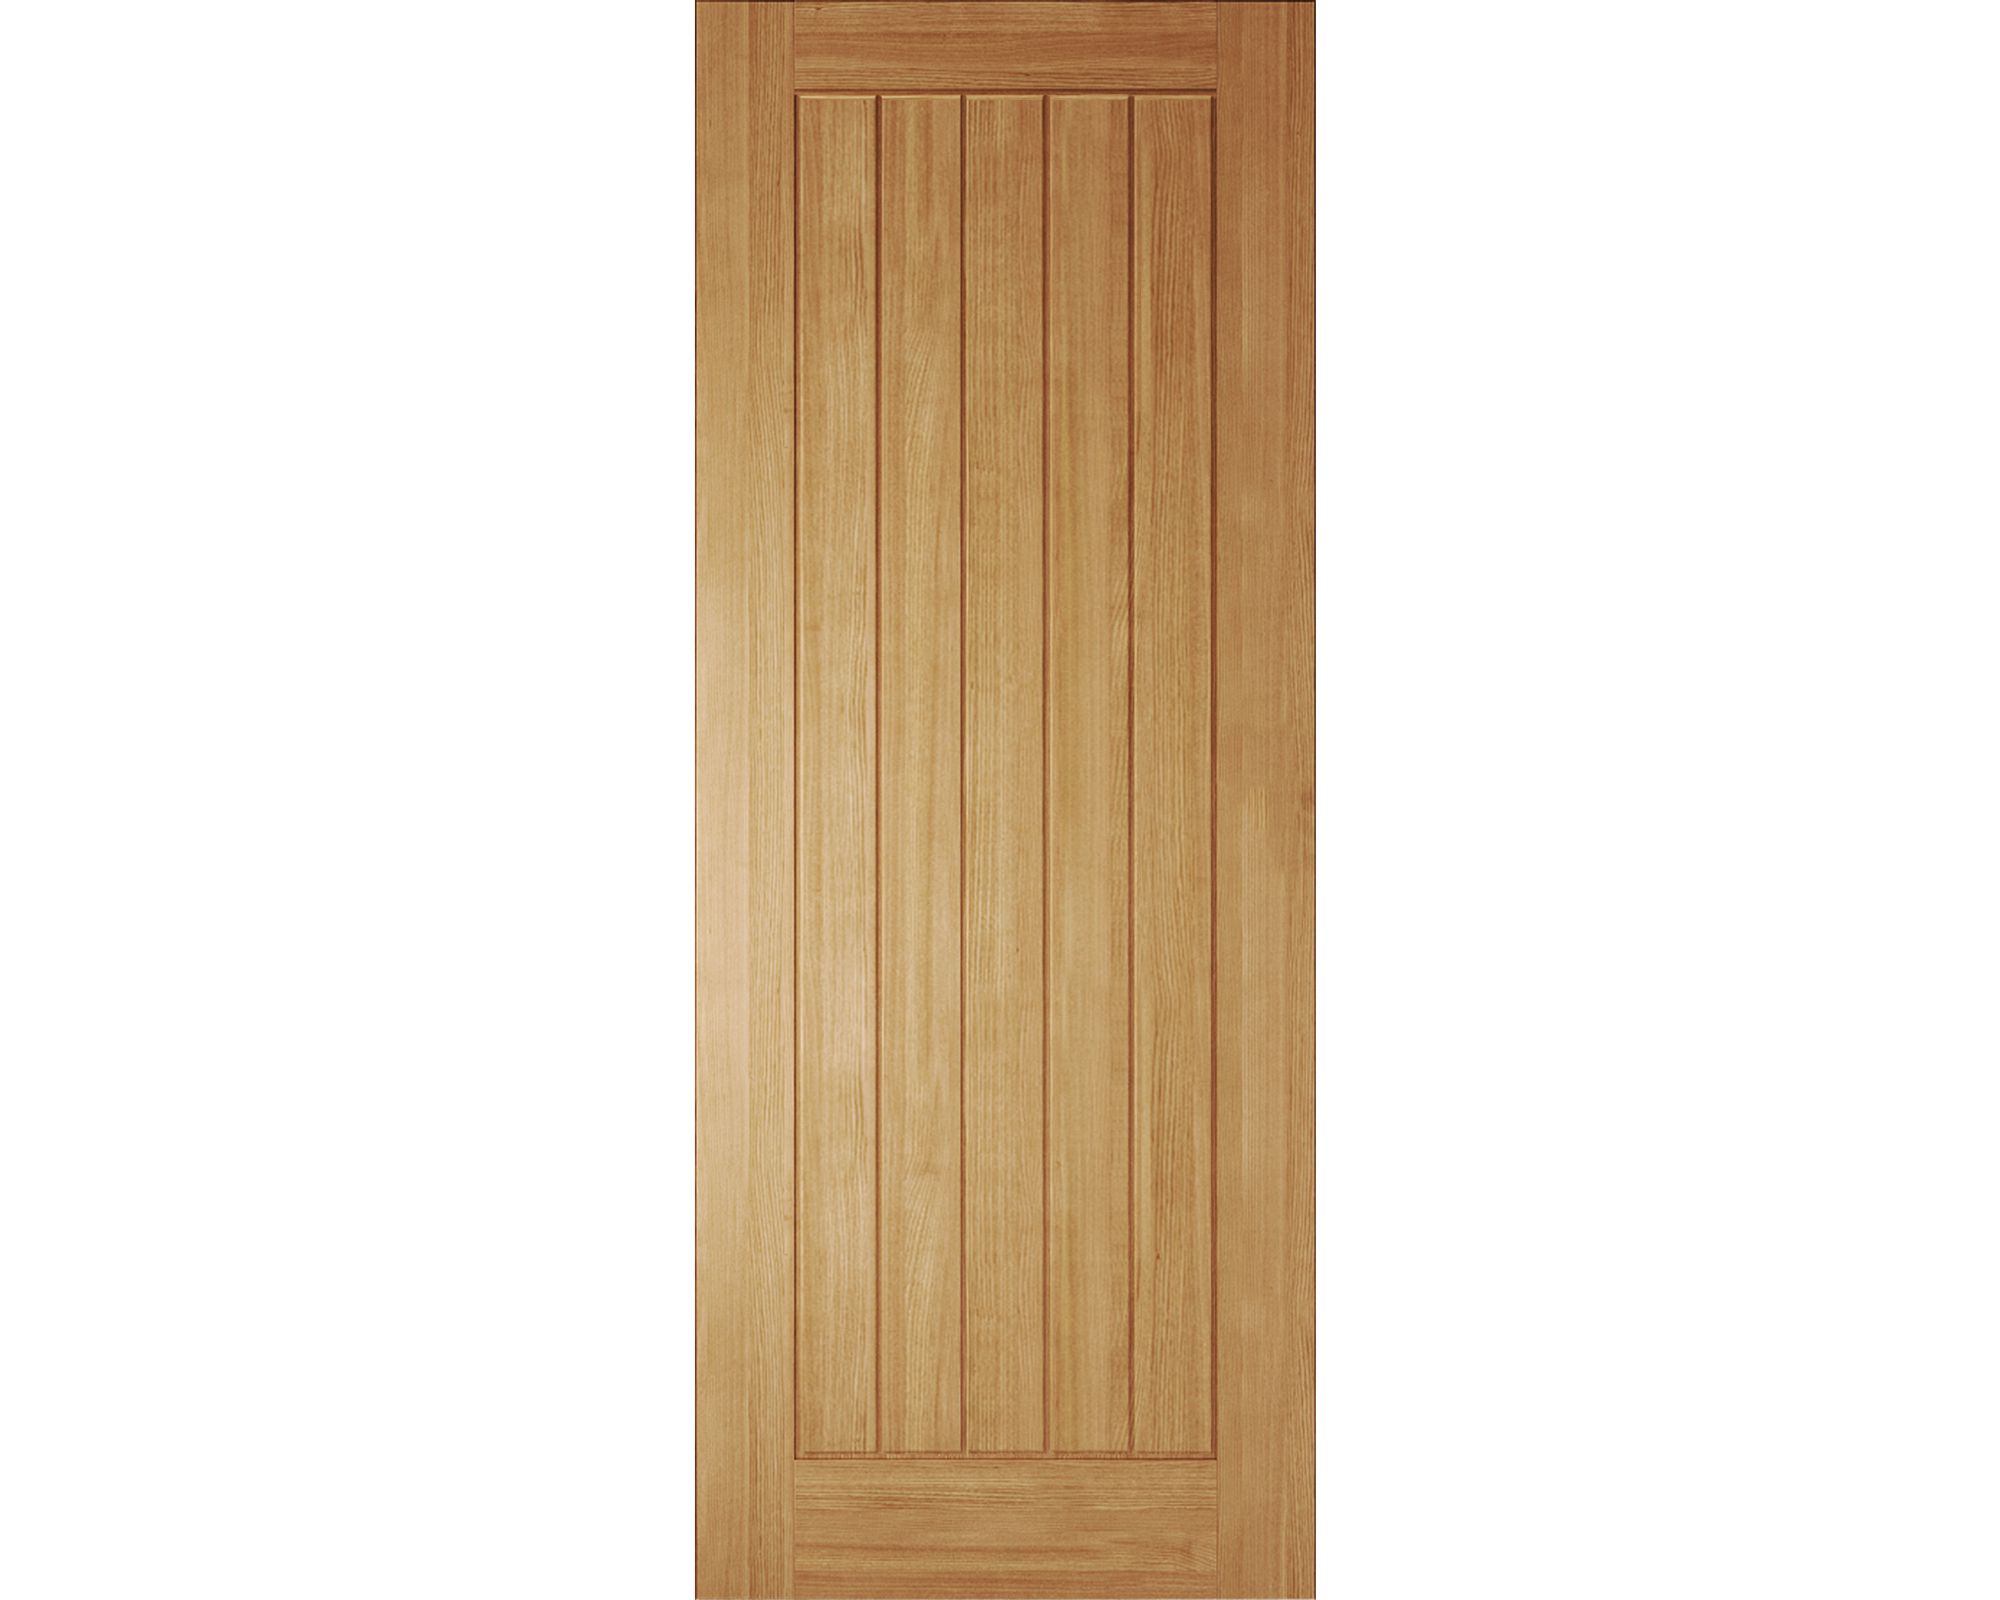 Unglazed Cottage White oak veneer Internal Timber Fire door, (H)1981mm (W)686mm (T)44mm